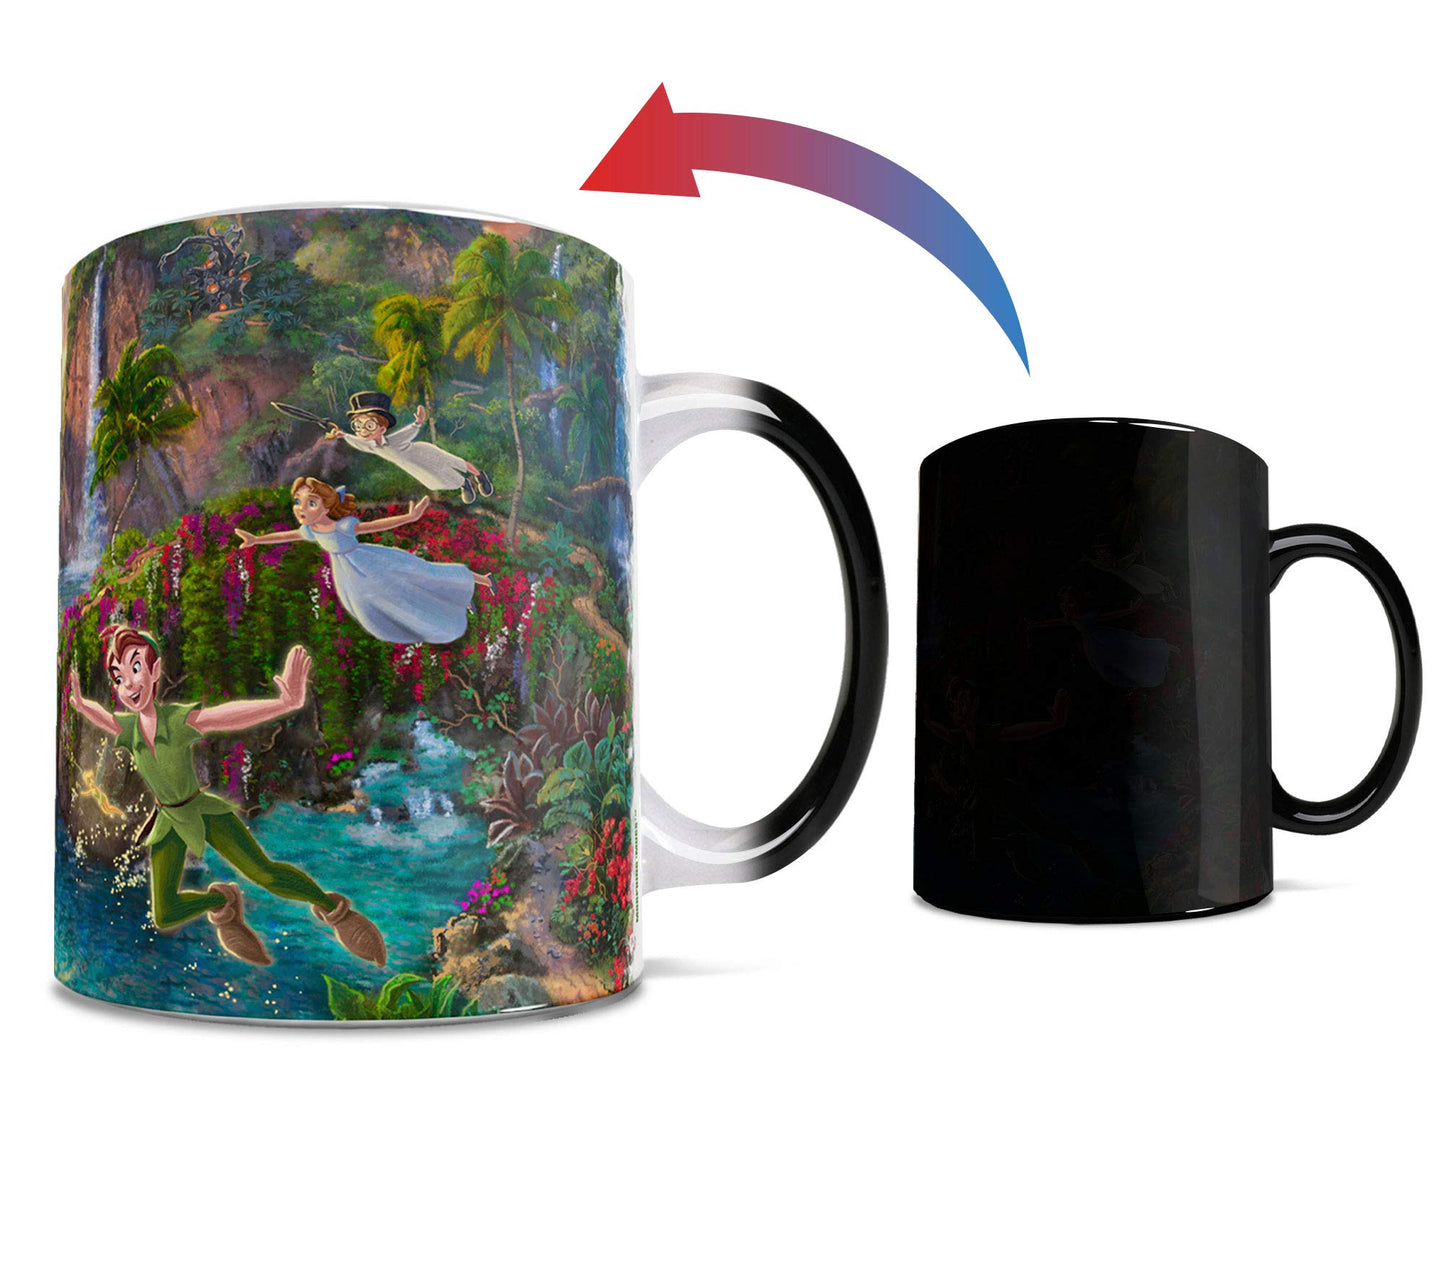 Disney - Peter Pan - Morphing Mugs Heat Sensitive Mug – Image revealed when HOT liquid is added - 11oz Large Drinkware